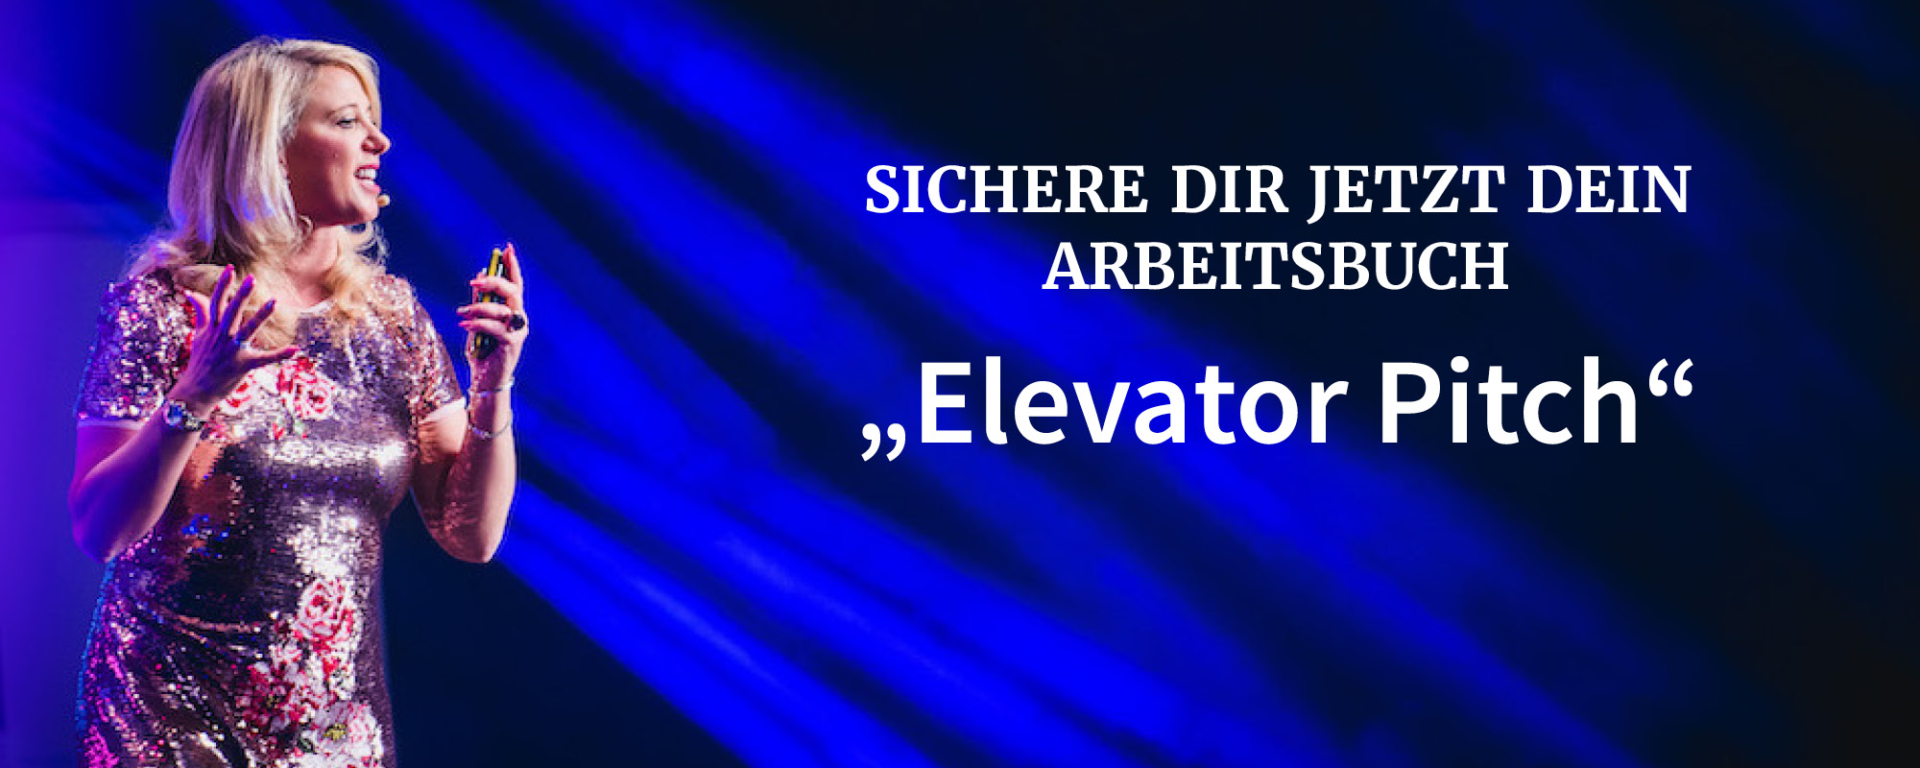 Header_Web_Elevator pitch